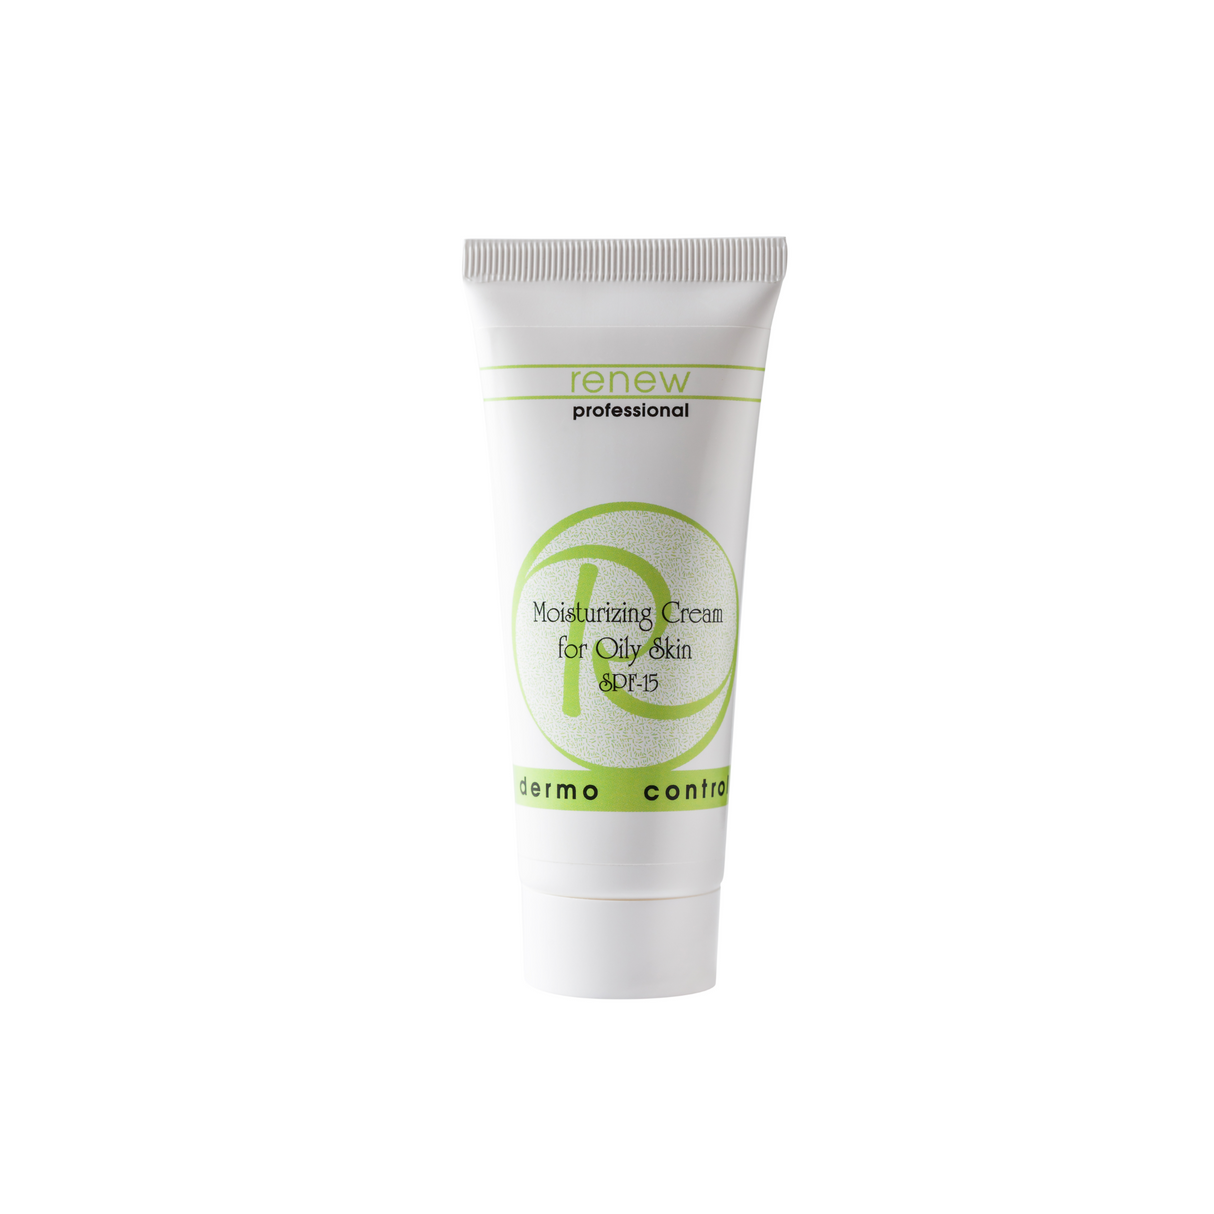 Renew Moisturizing Cream for Oily Skin SPF-15 - Moisturizing cream for oily skin with SPF-15